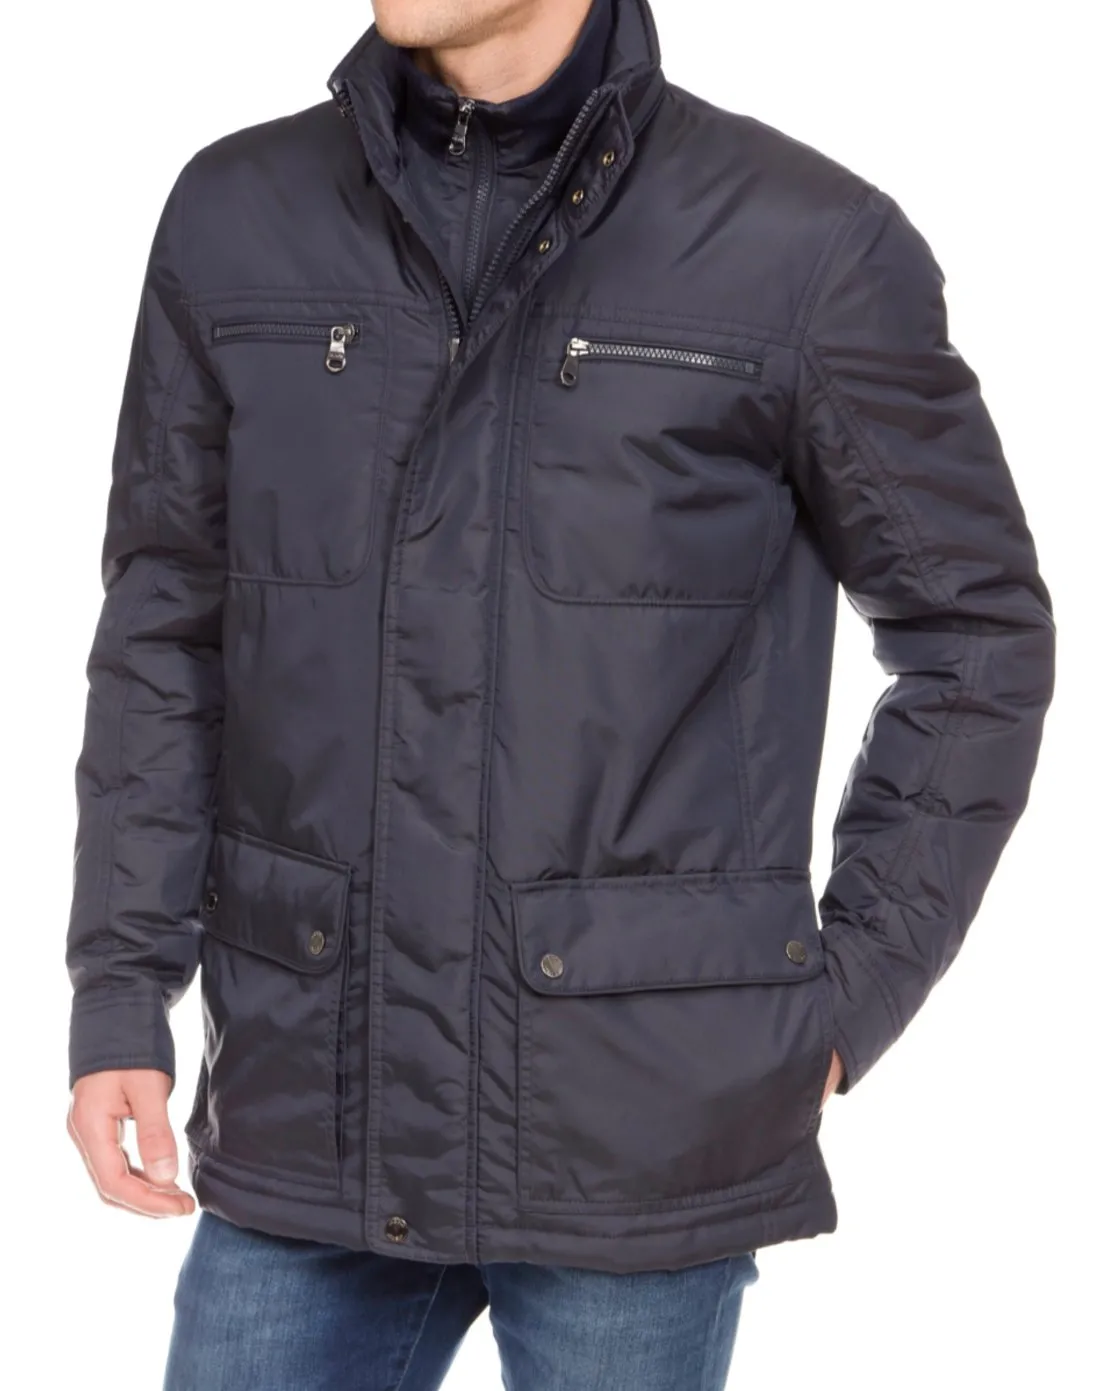 Corta vida Algebraico Escabullirse Утепленная куртка GEOX M7420K/T0579/F4300 - купить в интернет-магазине  Sportstyler